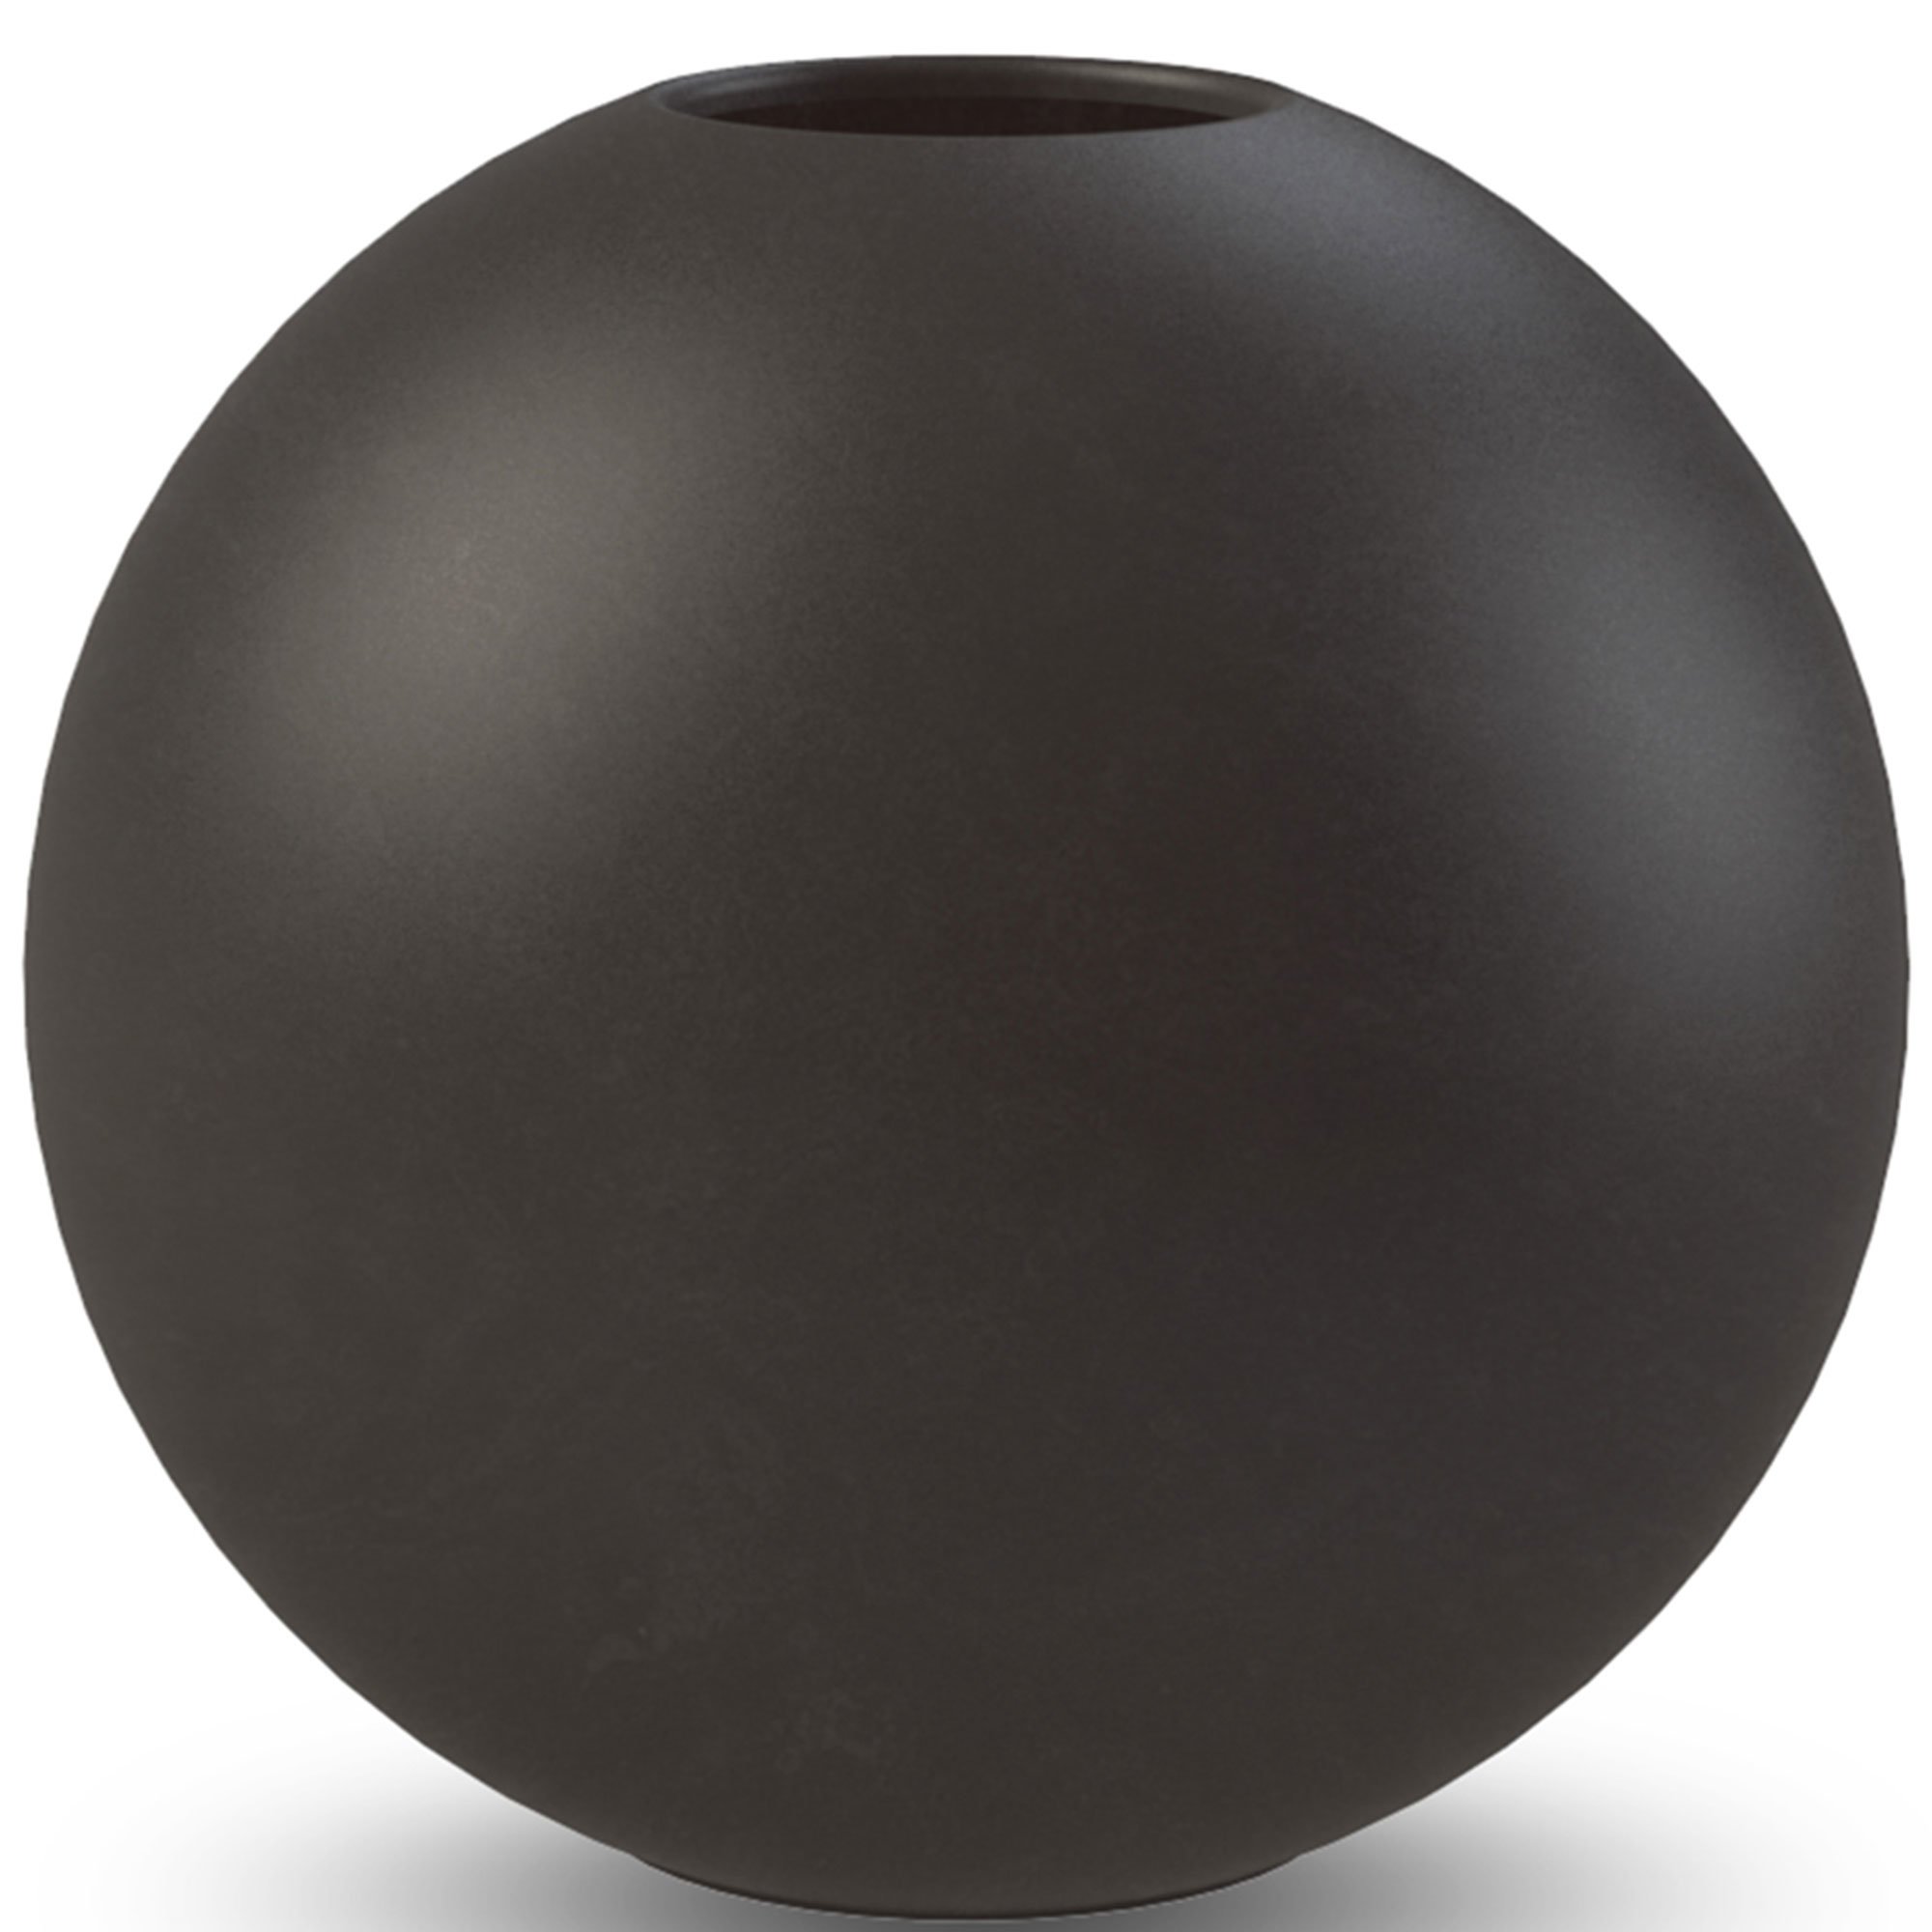 Cooee Design Ball vas 20 cm black